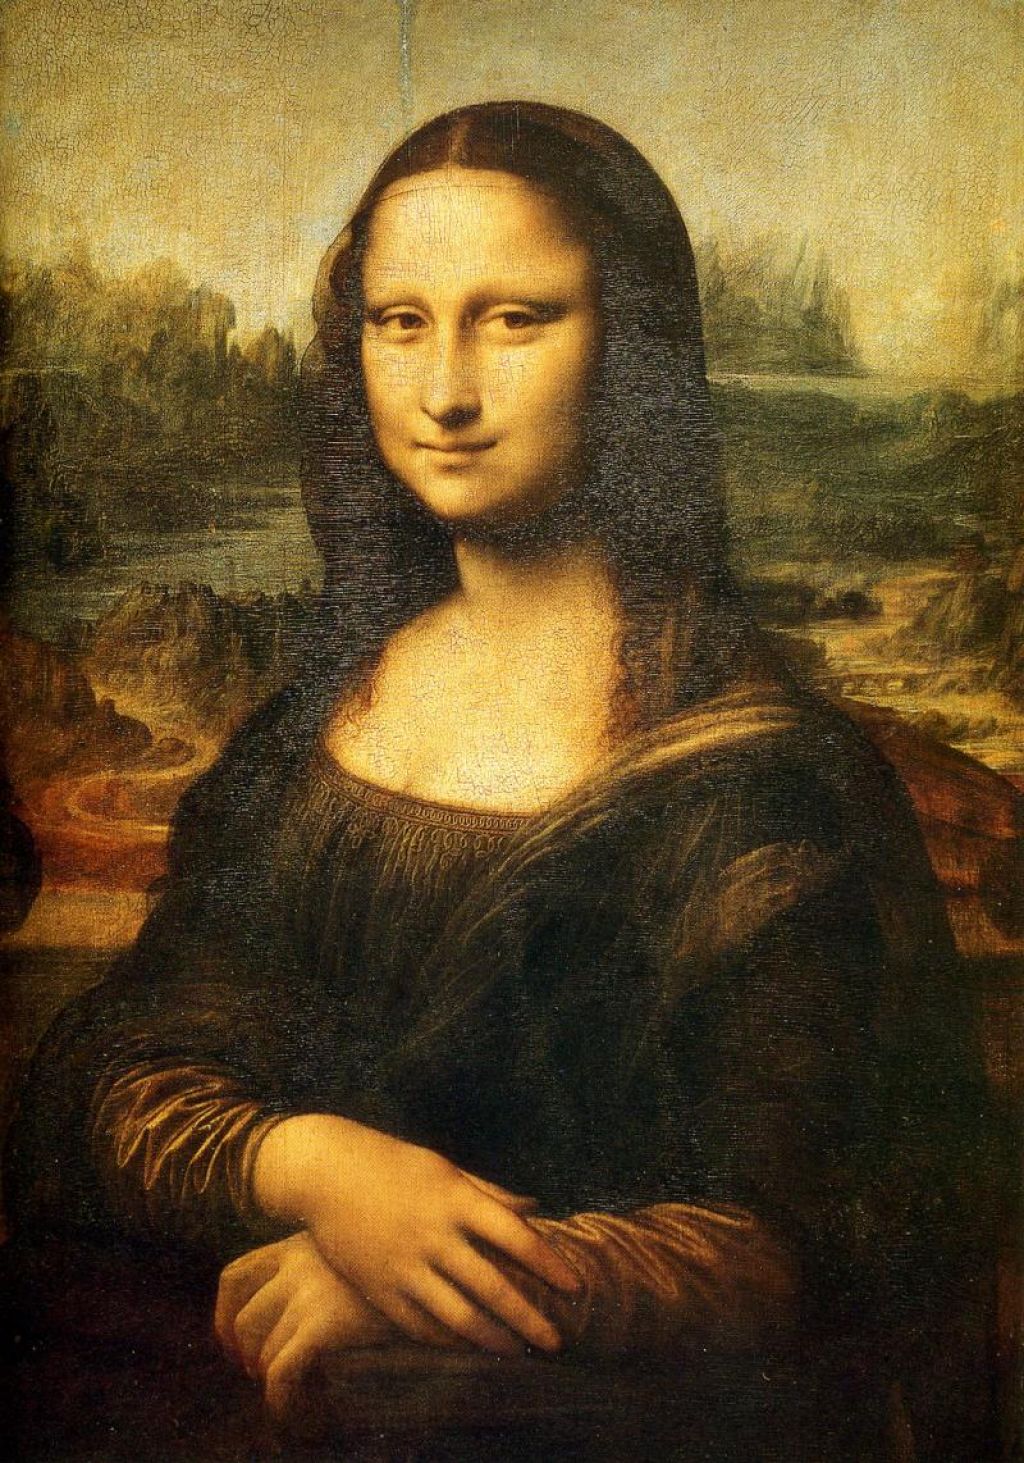 Ima Mona Liza predhodnico?